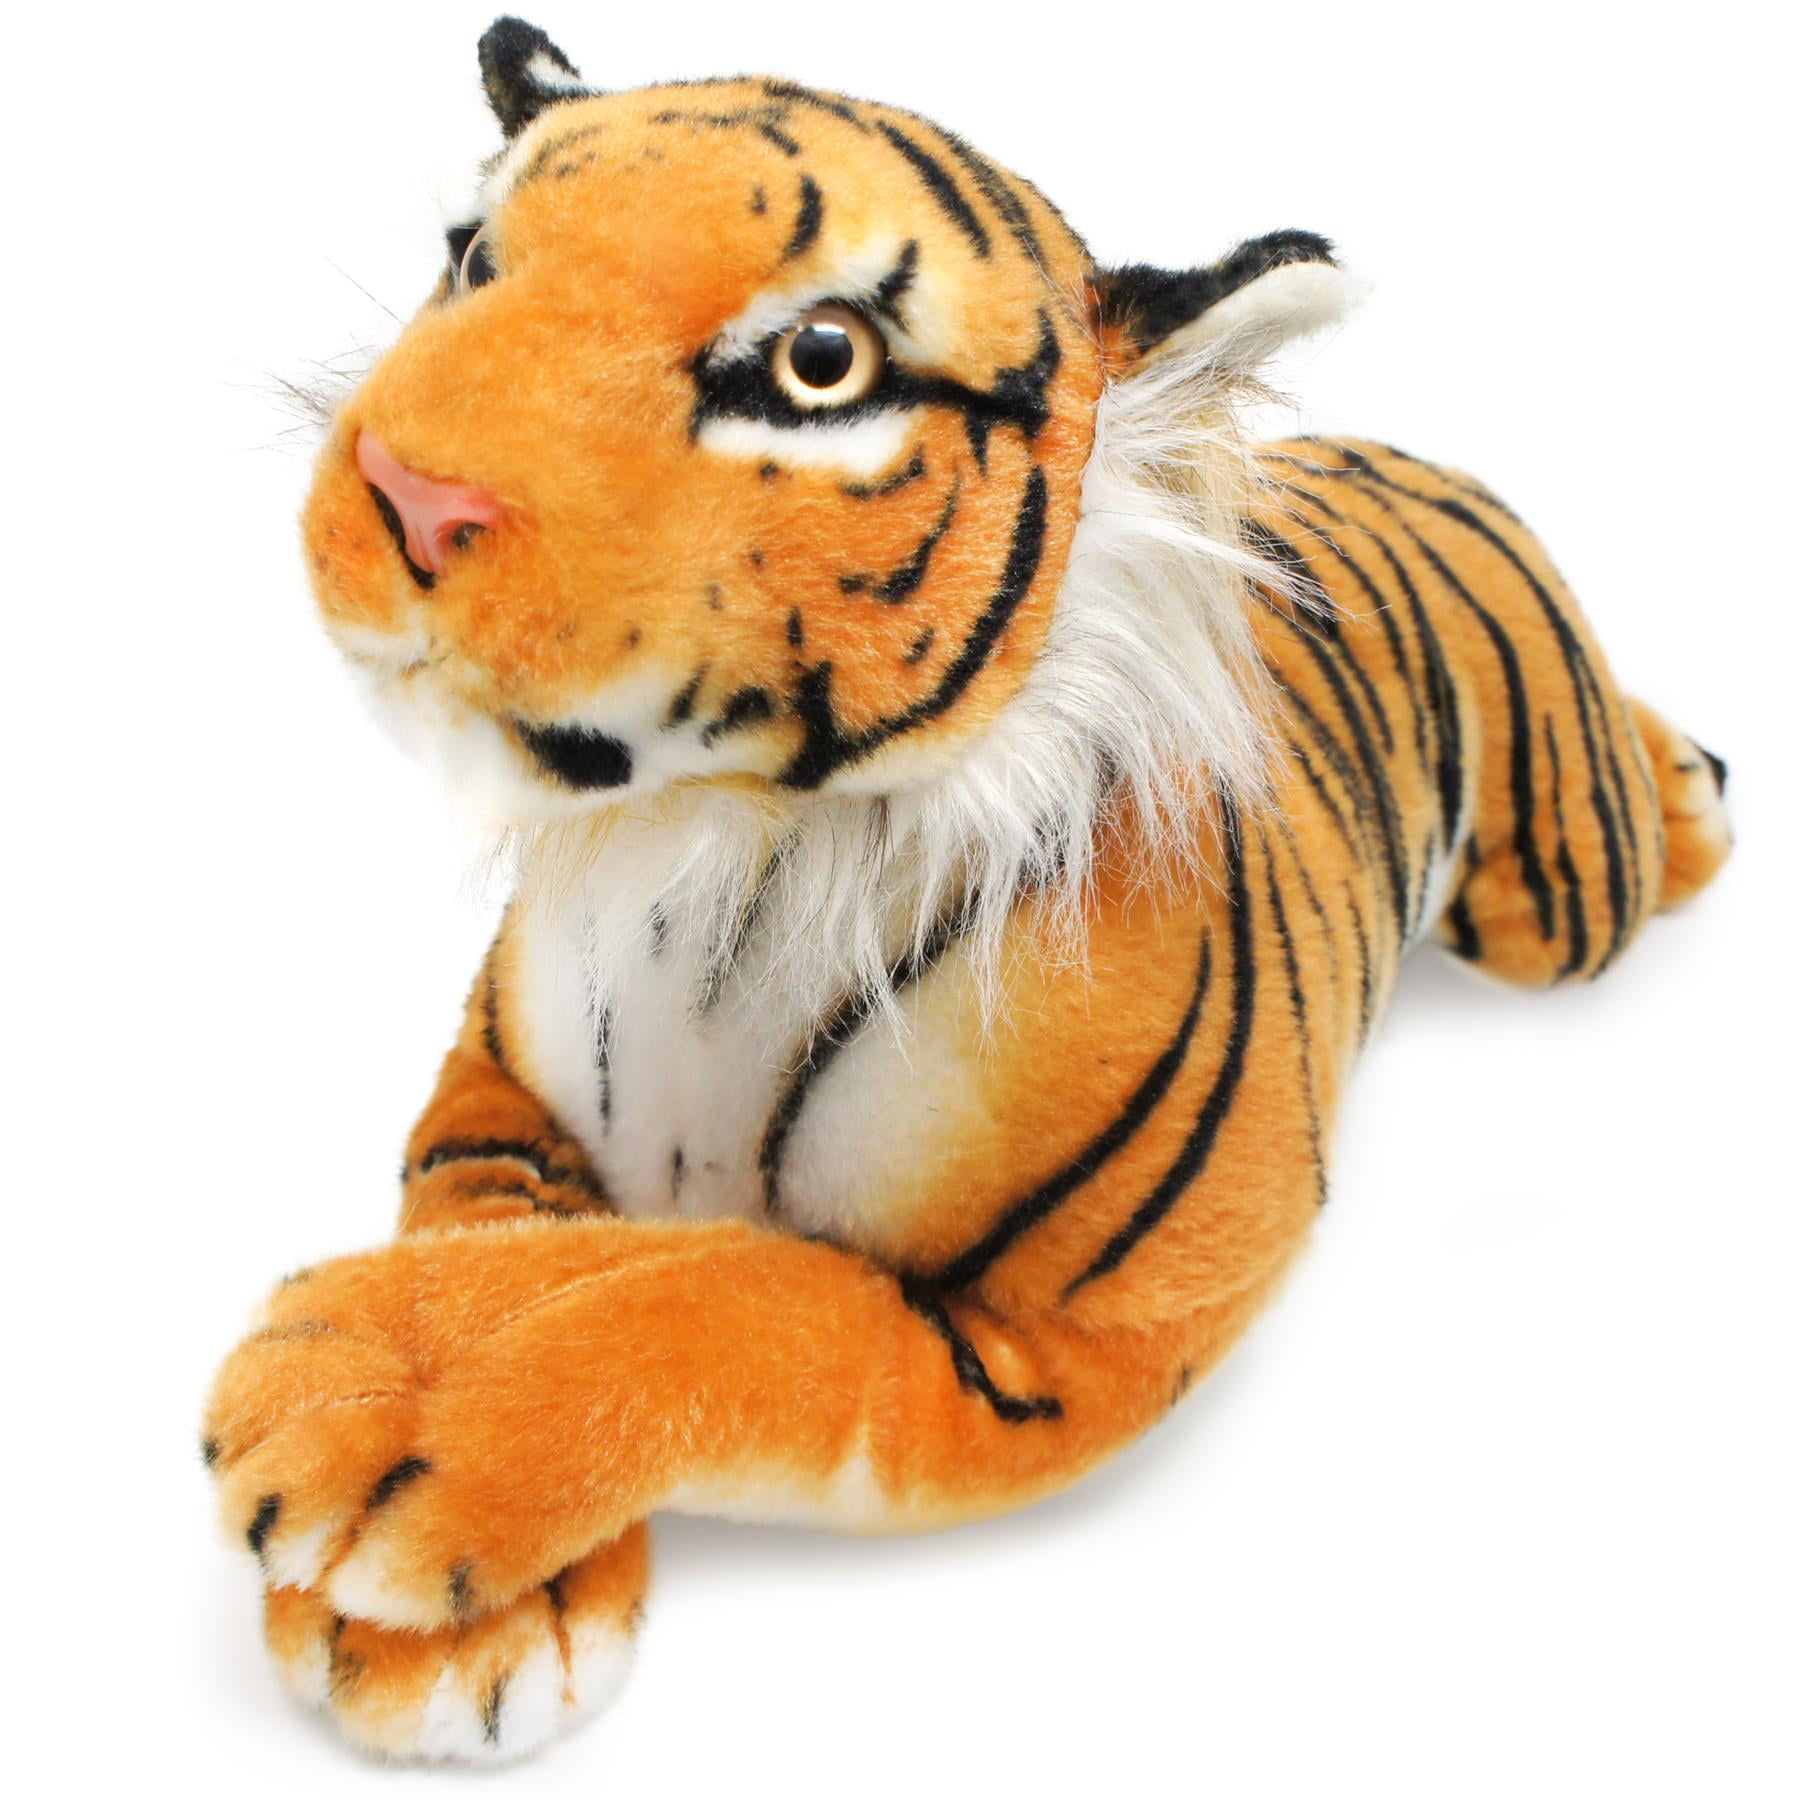 Tiger Stuffed Animal Plush Realistic Toy 18 inches  kids stuffed animal great 